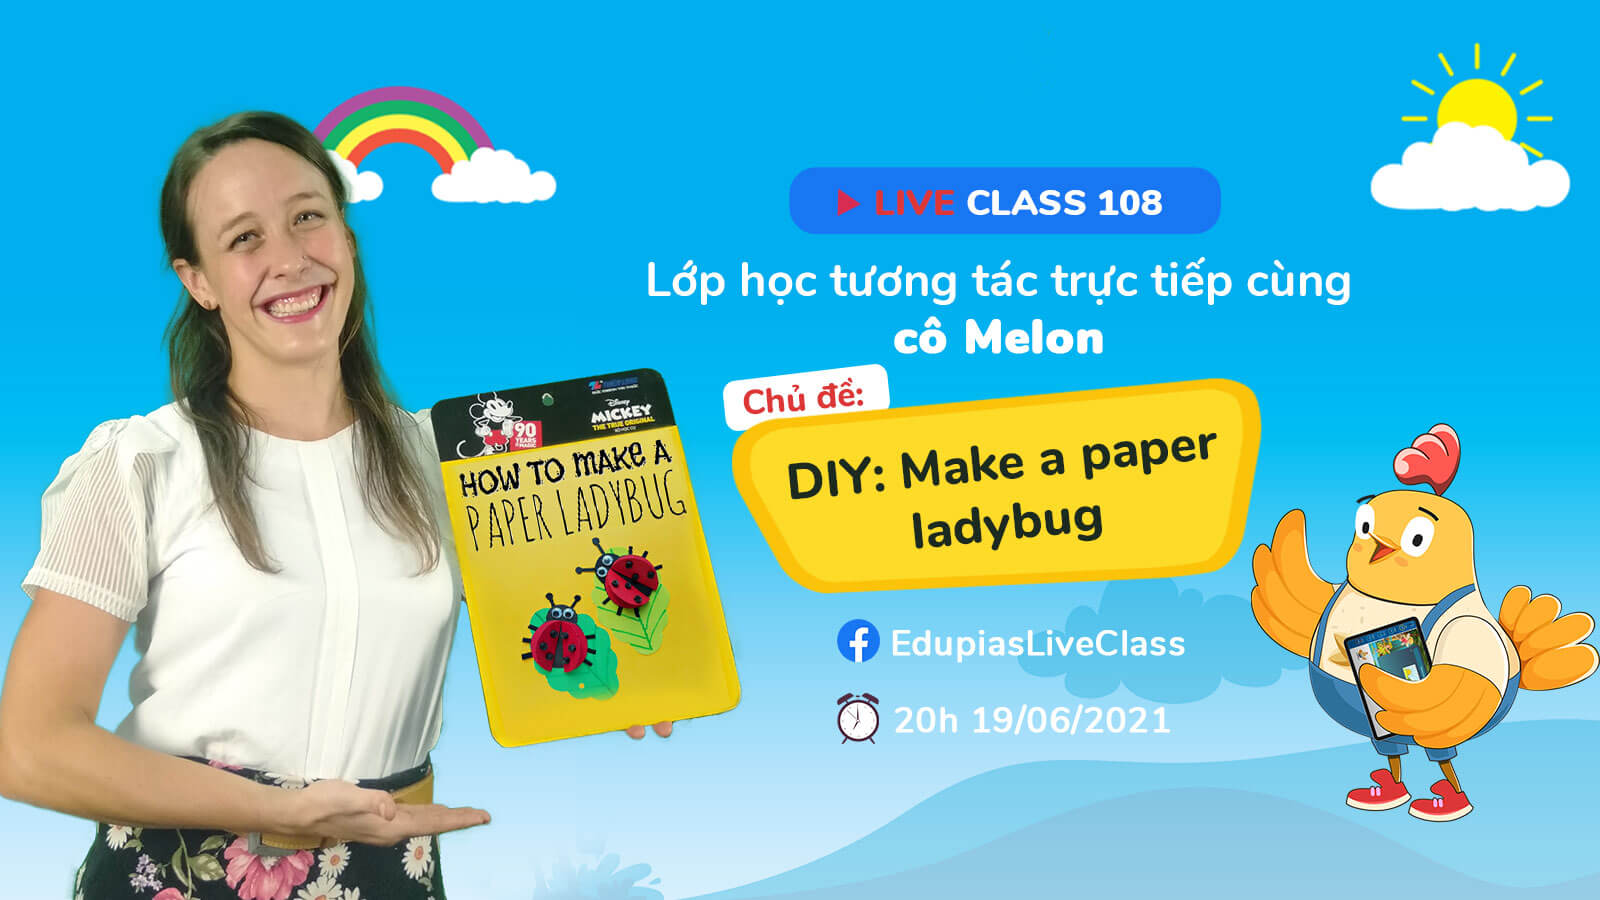 Live class tuần 108 - Chủ đề: Make a paper ladybug